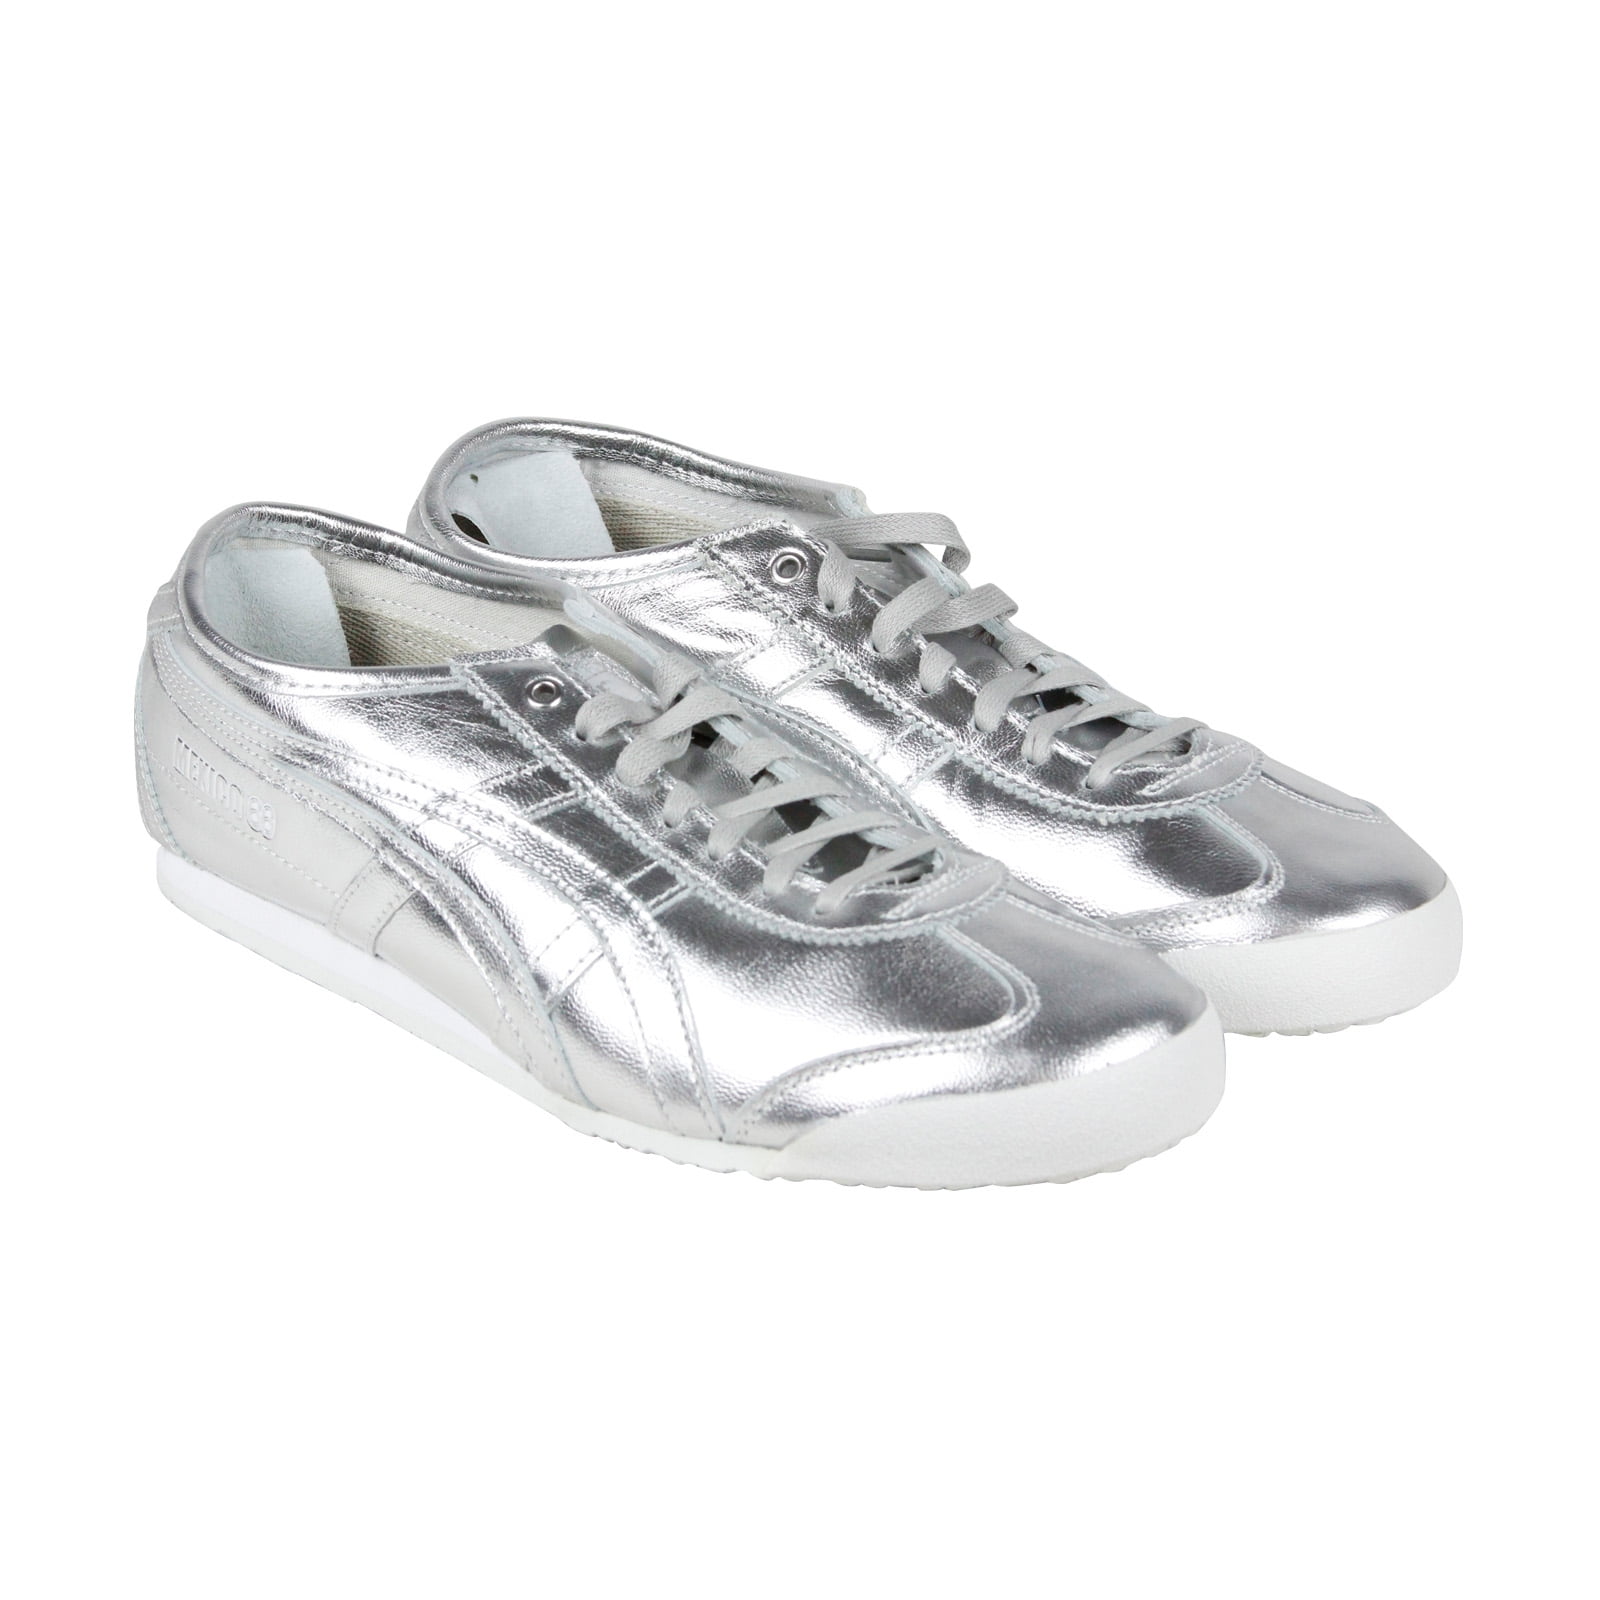 silver shoes at walmart